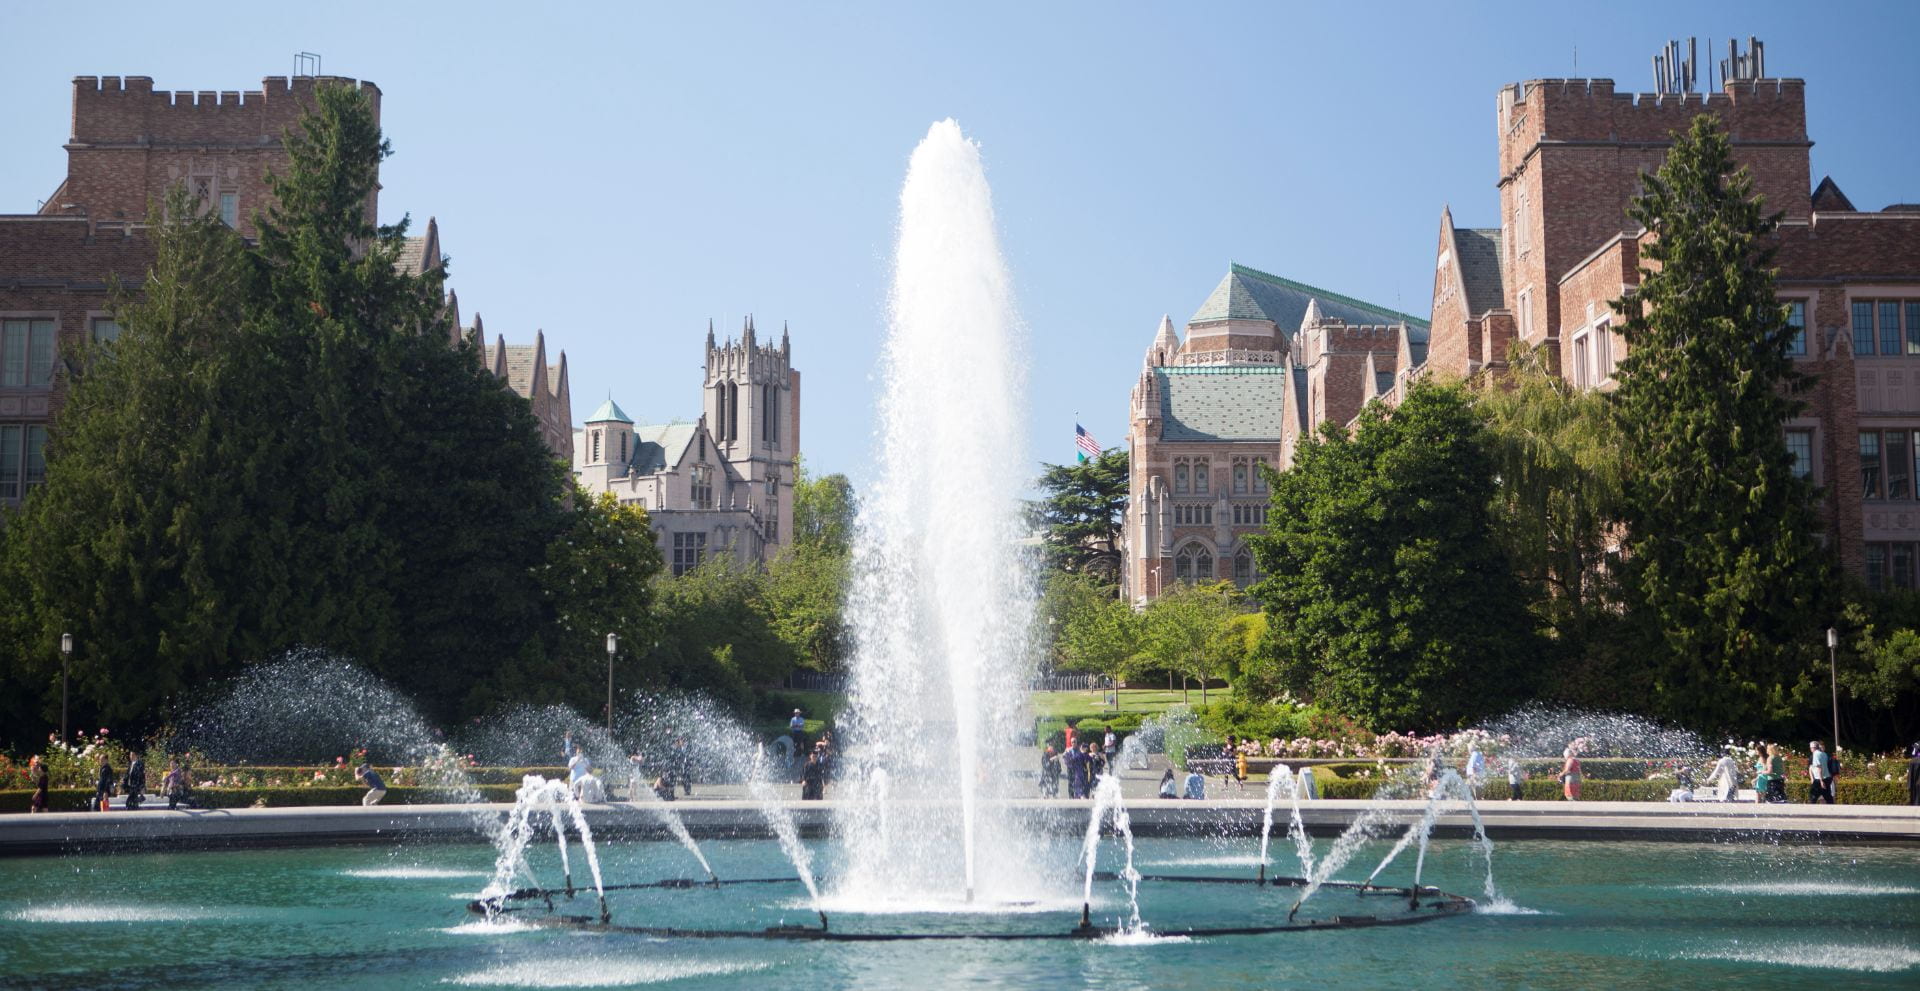 Drumheller Fountain on the University of Washington campus